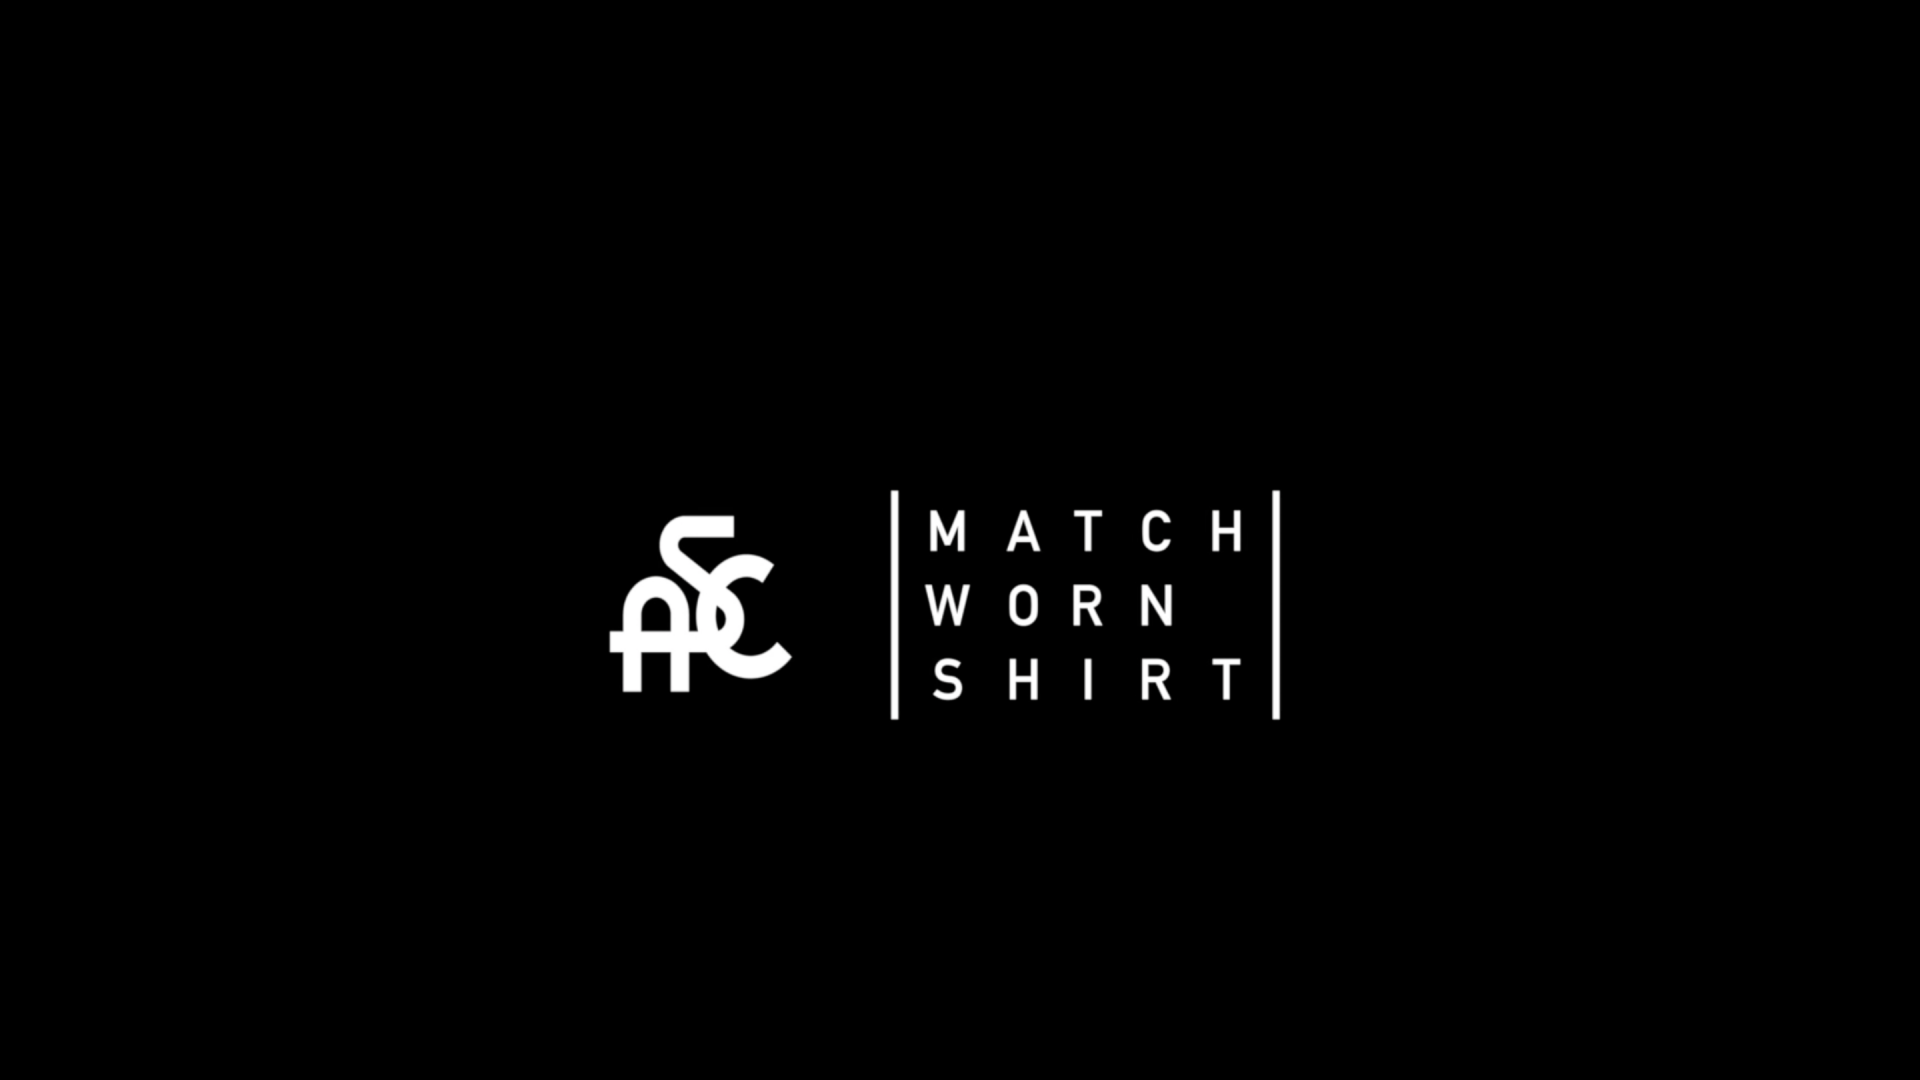 Spezia Calcio and MatchWornShirt: new partnership launched